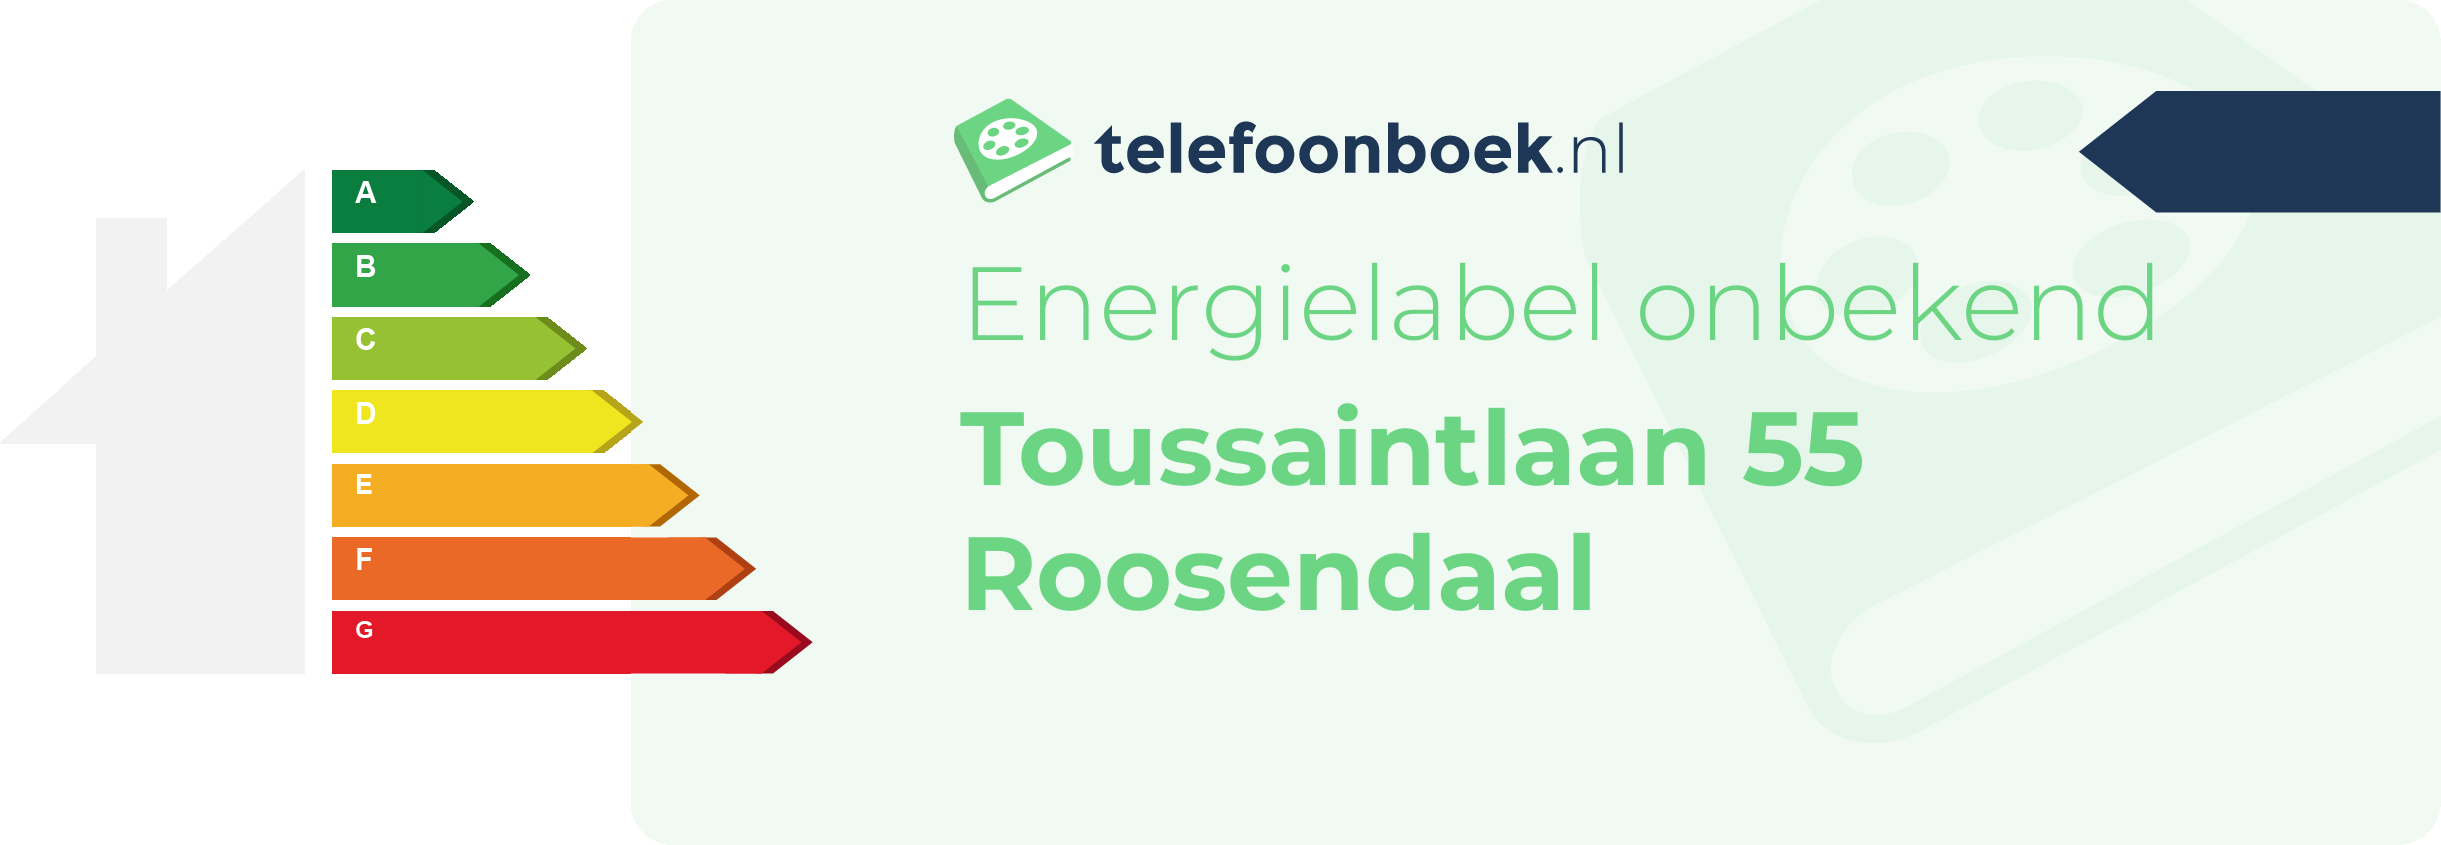 Energielabel Toussaintlaan 55 Roosendaal